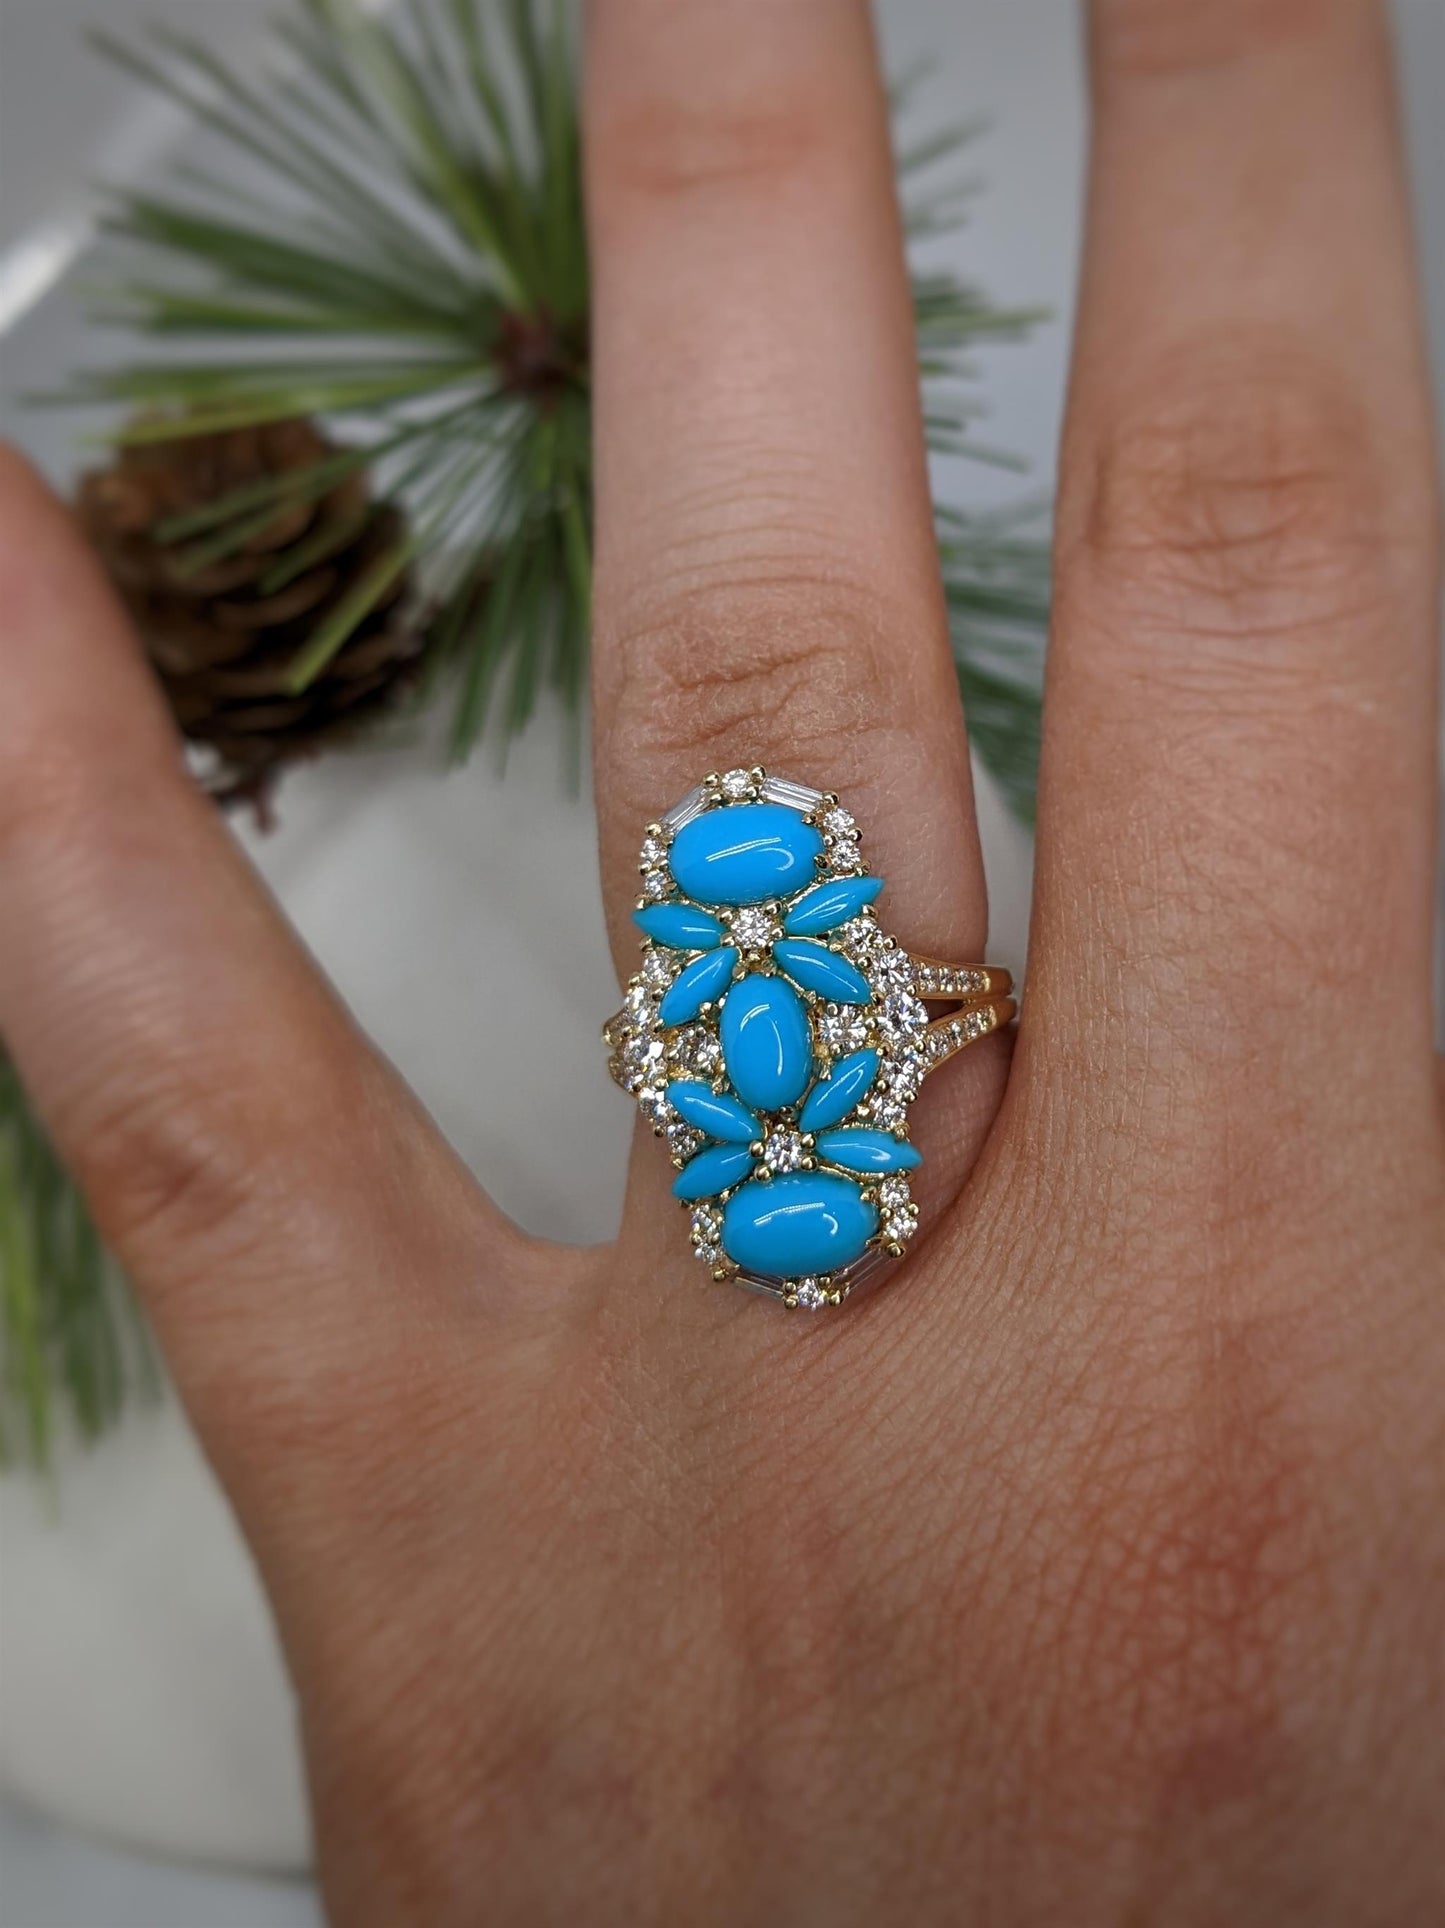 14K YG 2.14ct Turquoise and 0.74tdw Diamond Art Deco Inspired Ring